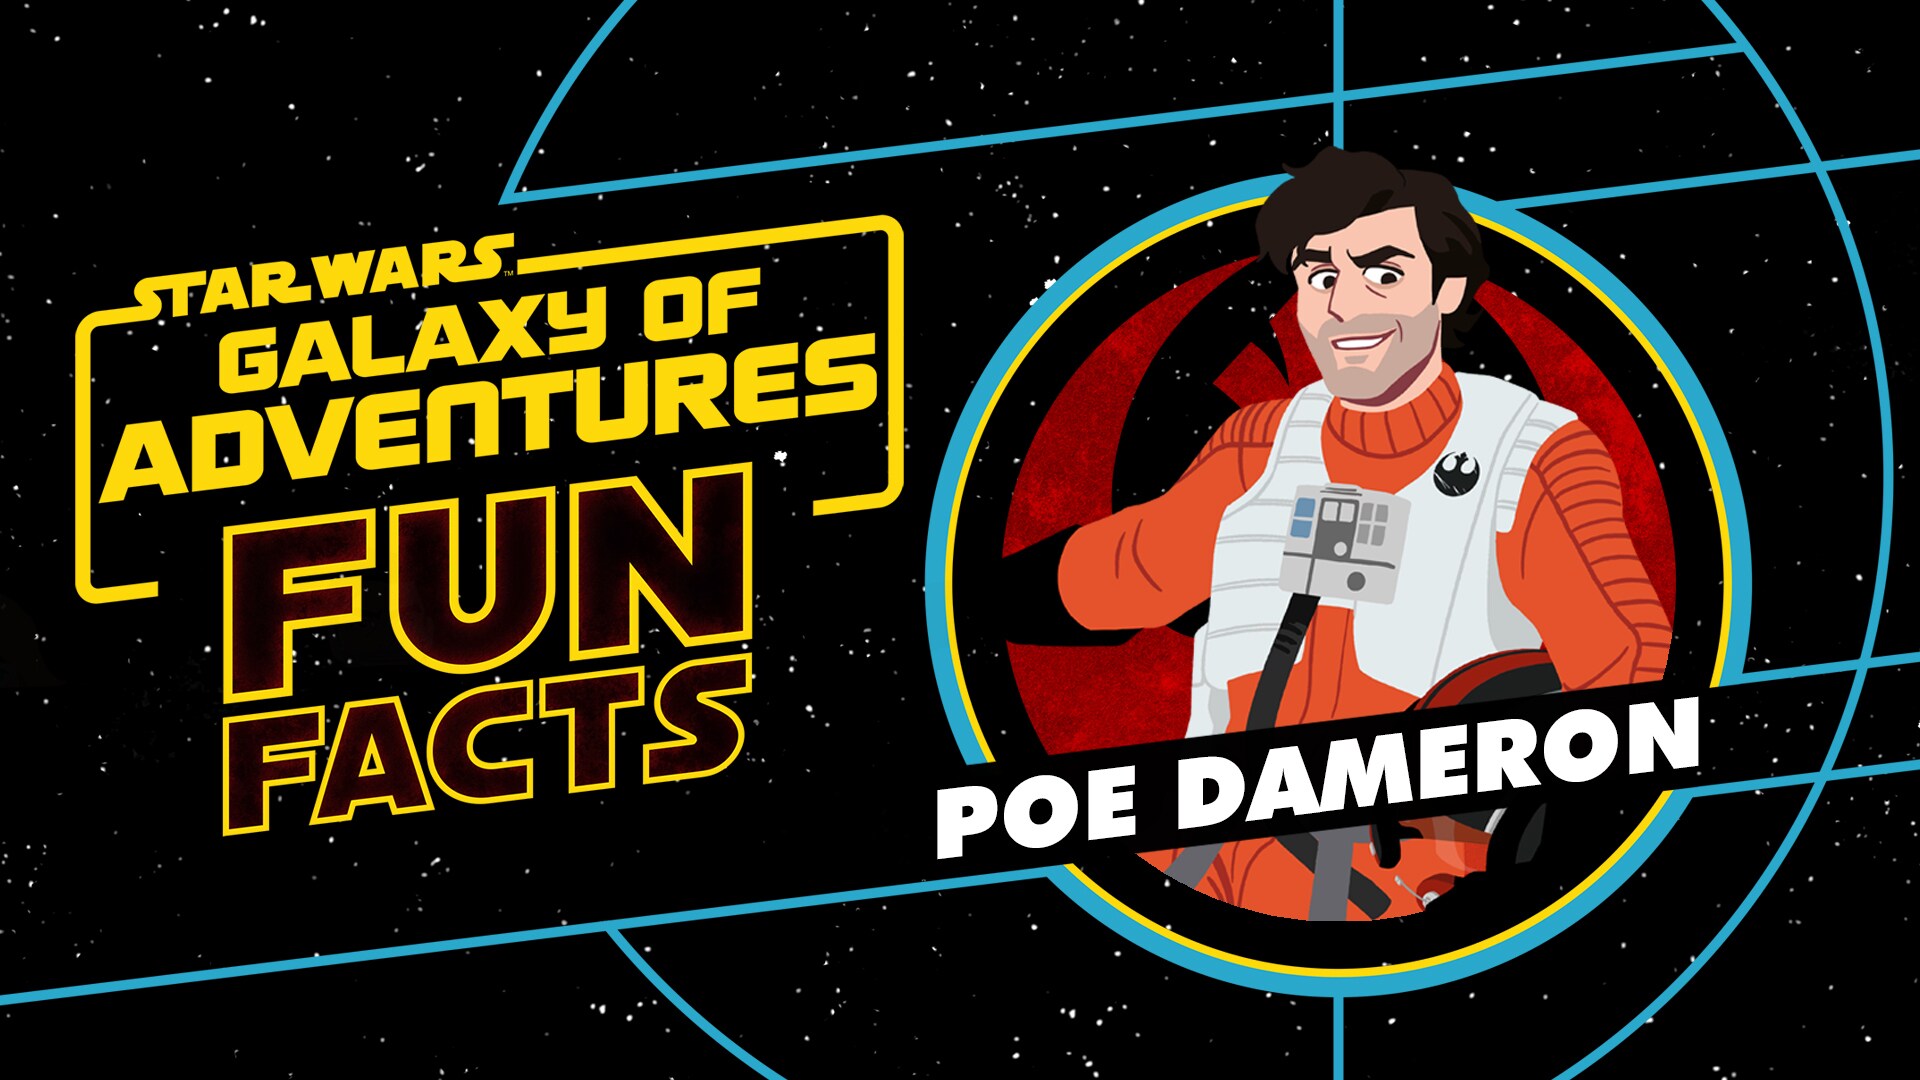 Poe Dameron | Star Wars Galaxy of Adventures Fun Facts